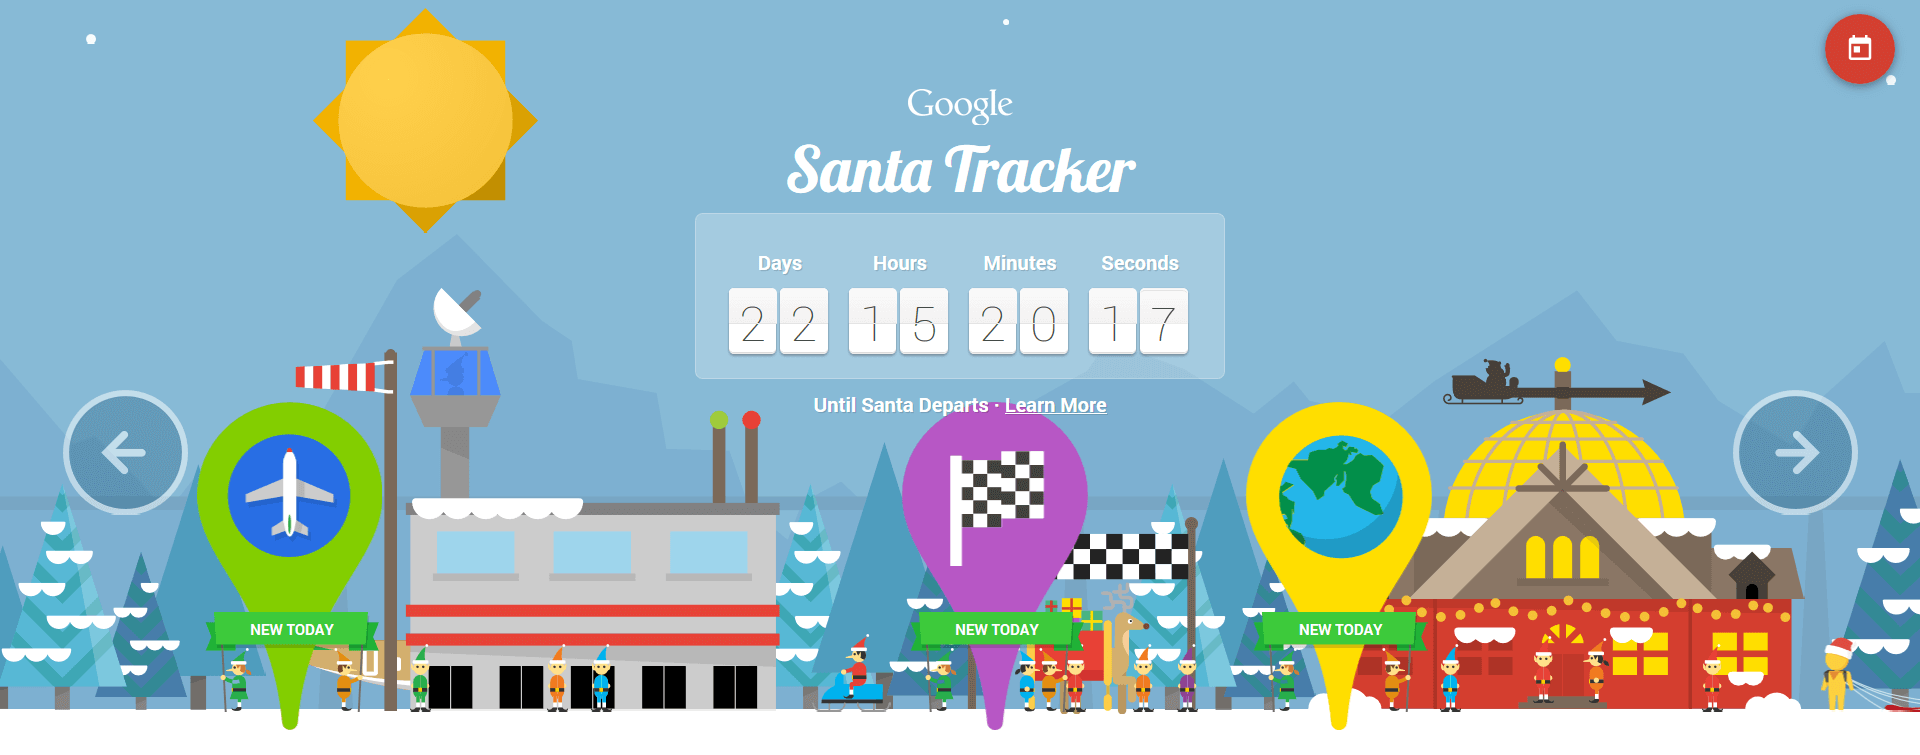 Santa Tracker Google Image